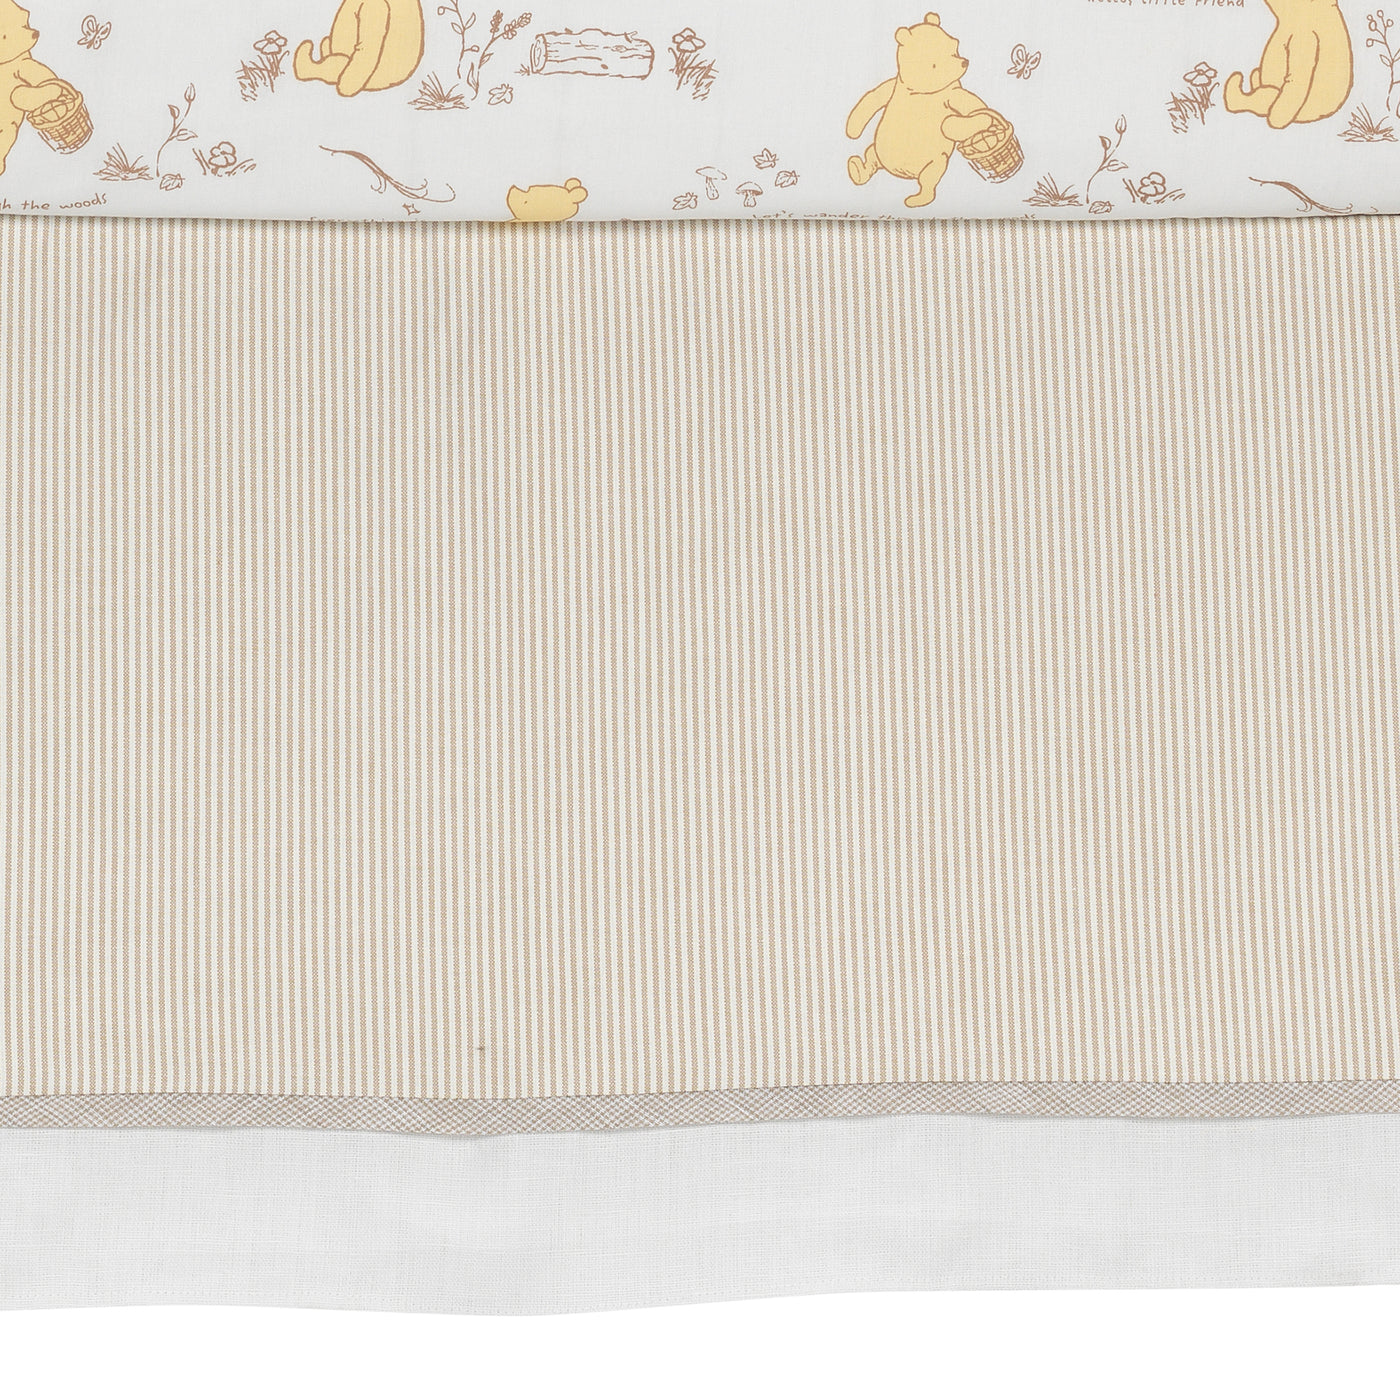 Storytime Pooh 3-Piece Bedding Set